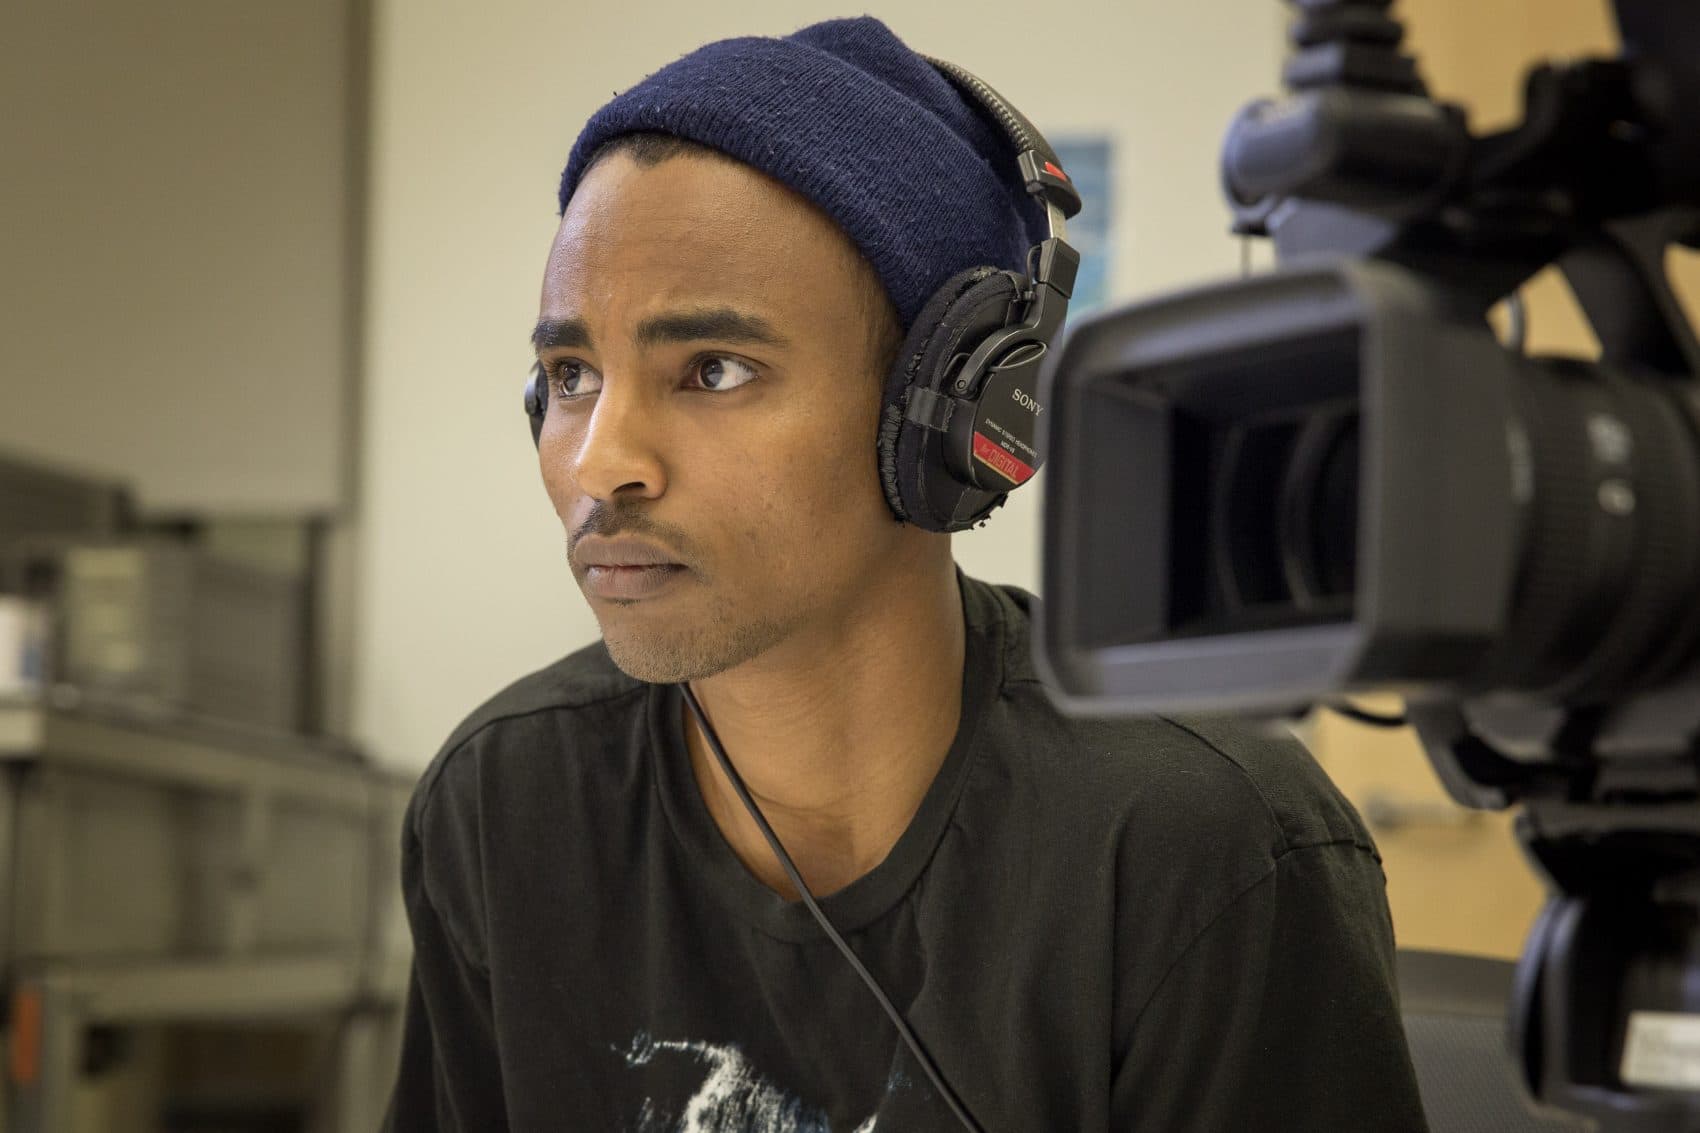 Filmmaker Abdirahman Abdi at UMass, conducting an interview for his film. (Robin Lubbock/WBUR)